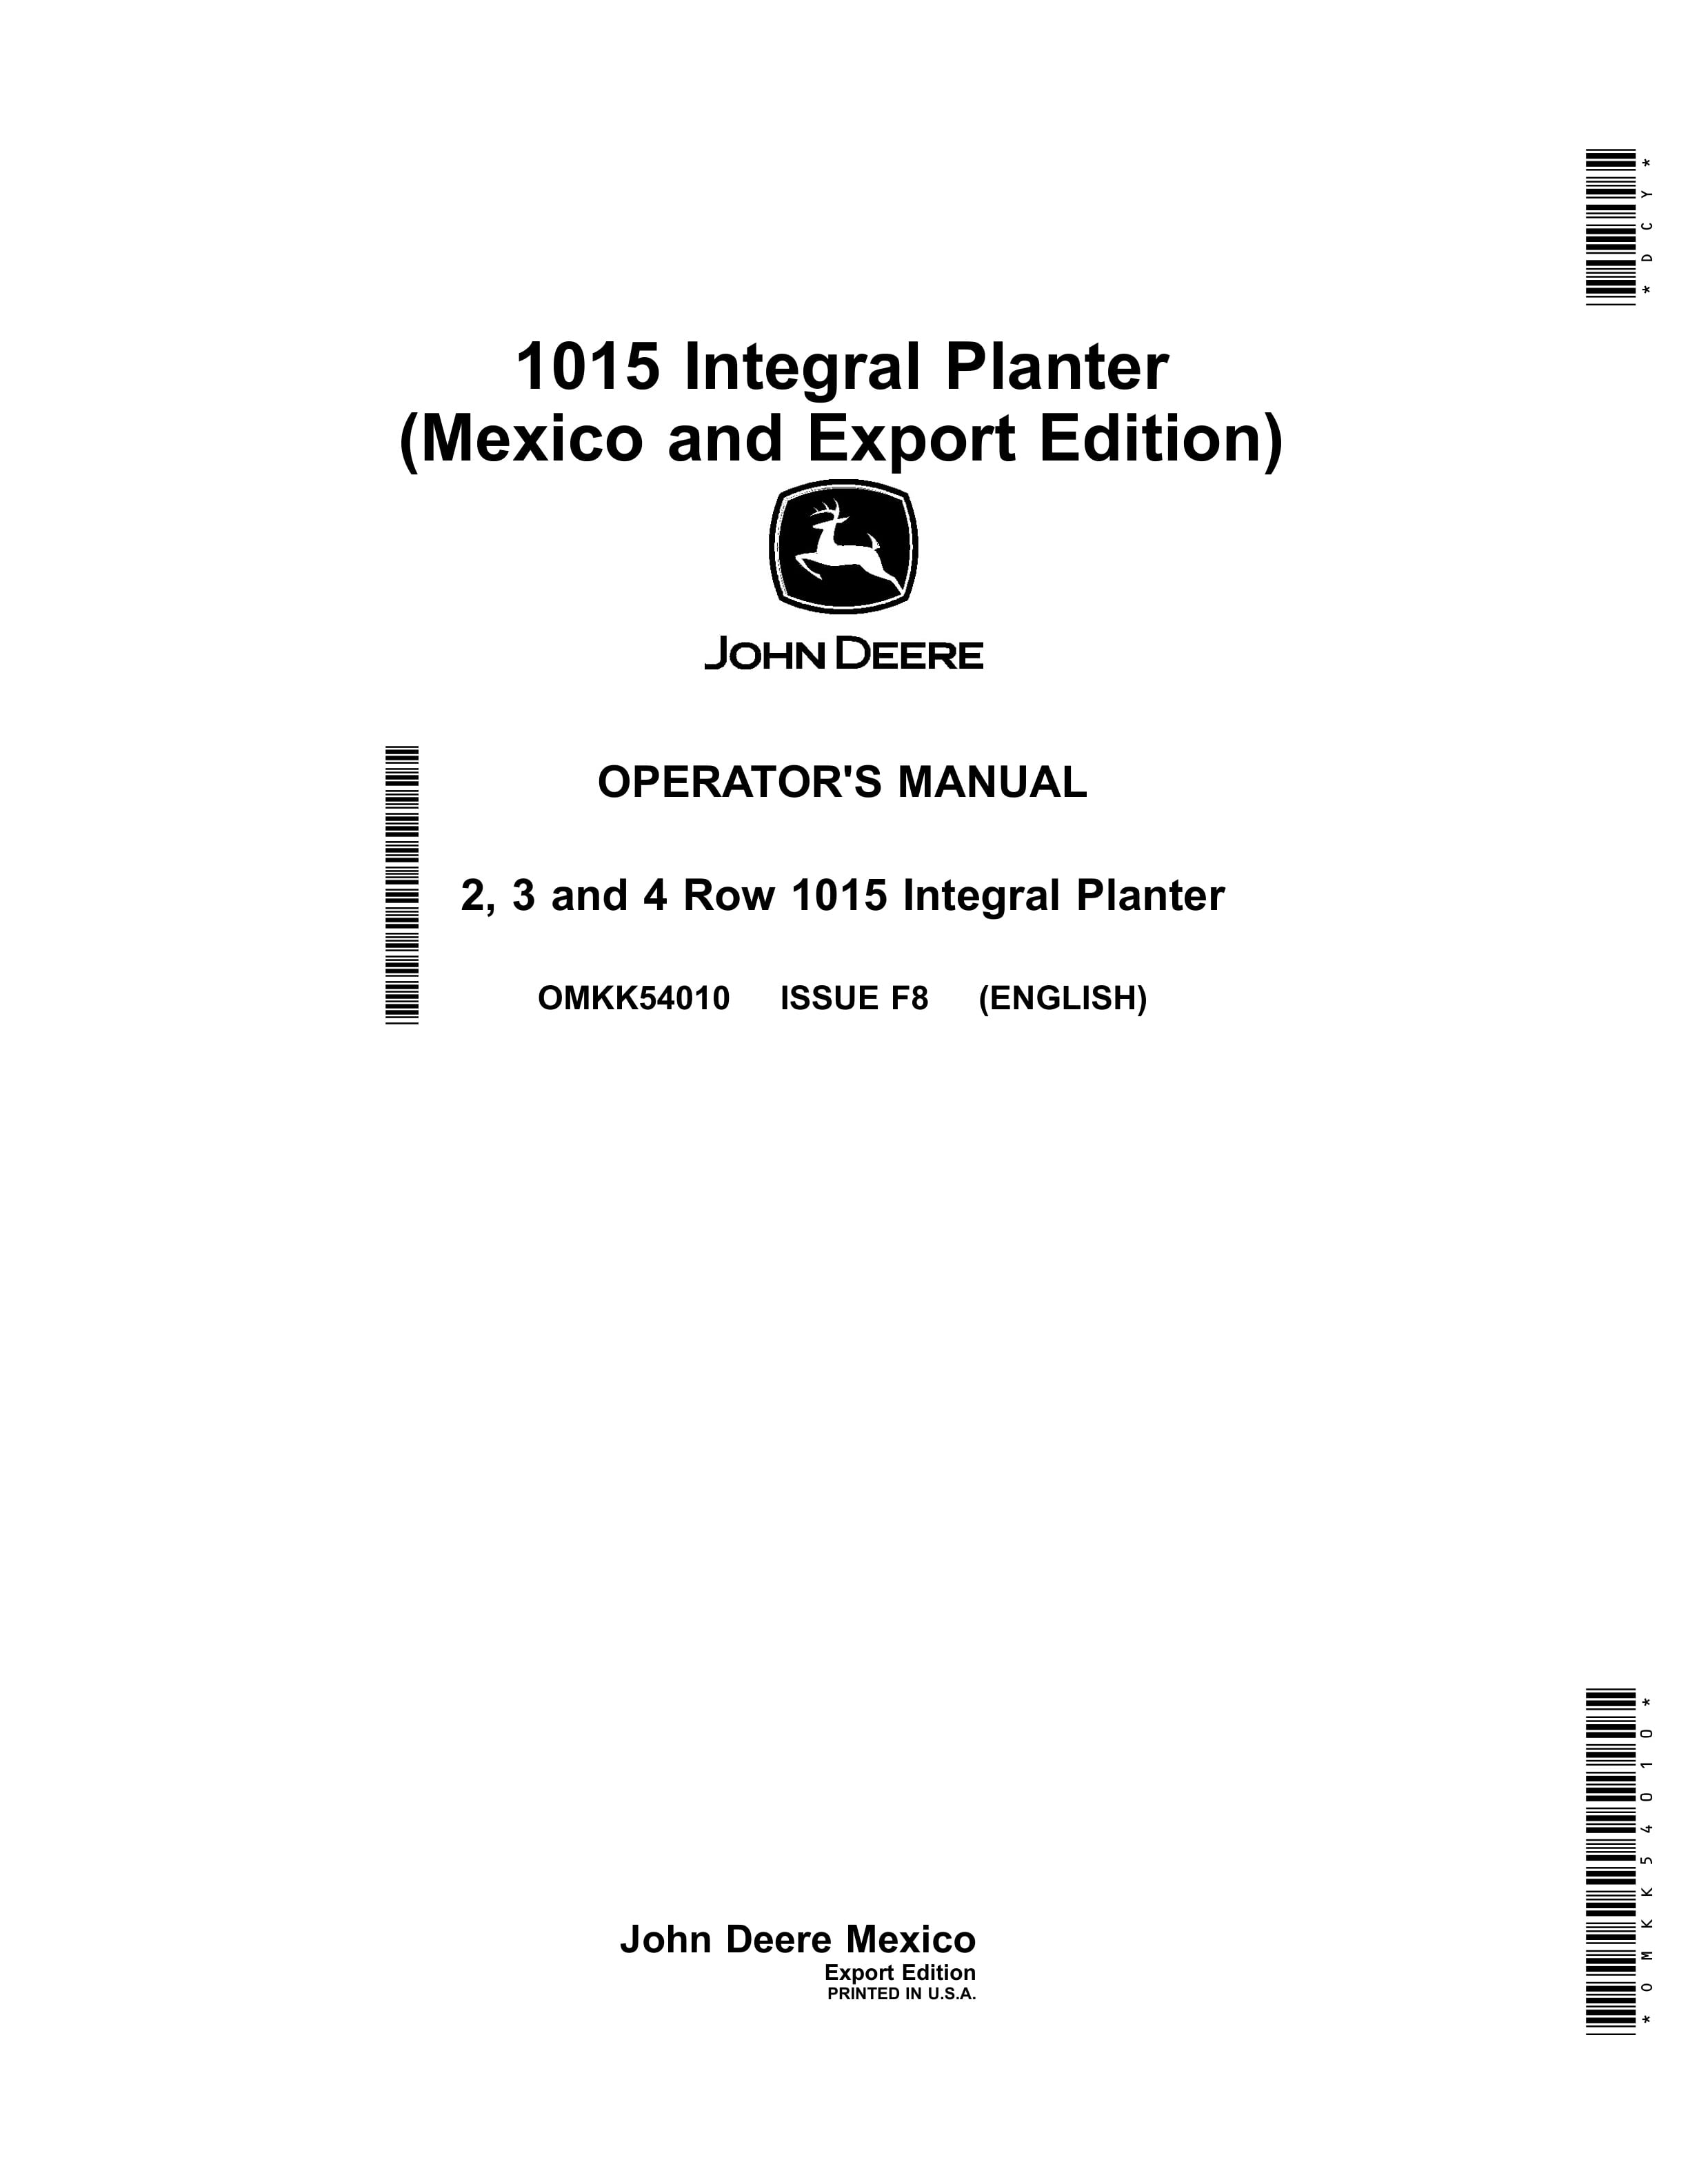 John Deere 2 3 and 4 Row 1015 Integral Planter Operator Manual OMKK54010 1